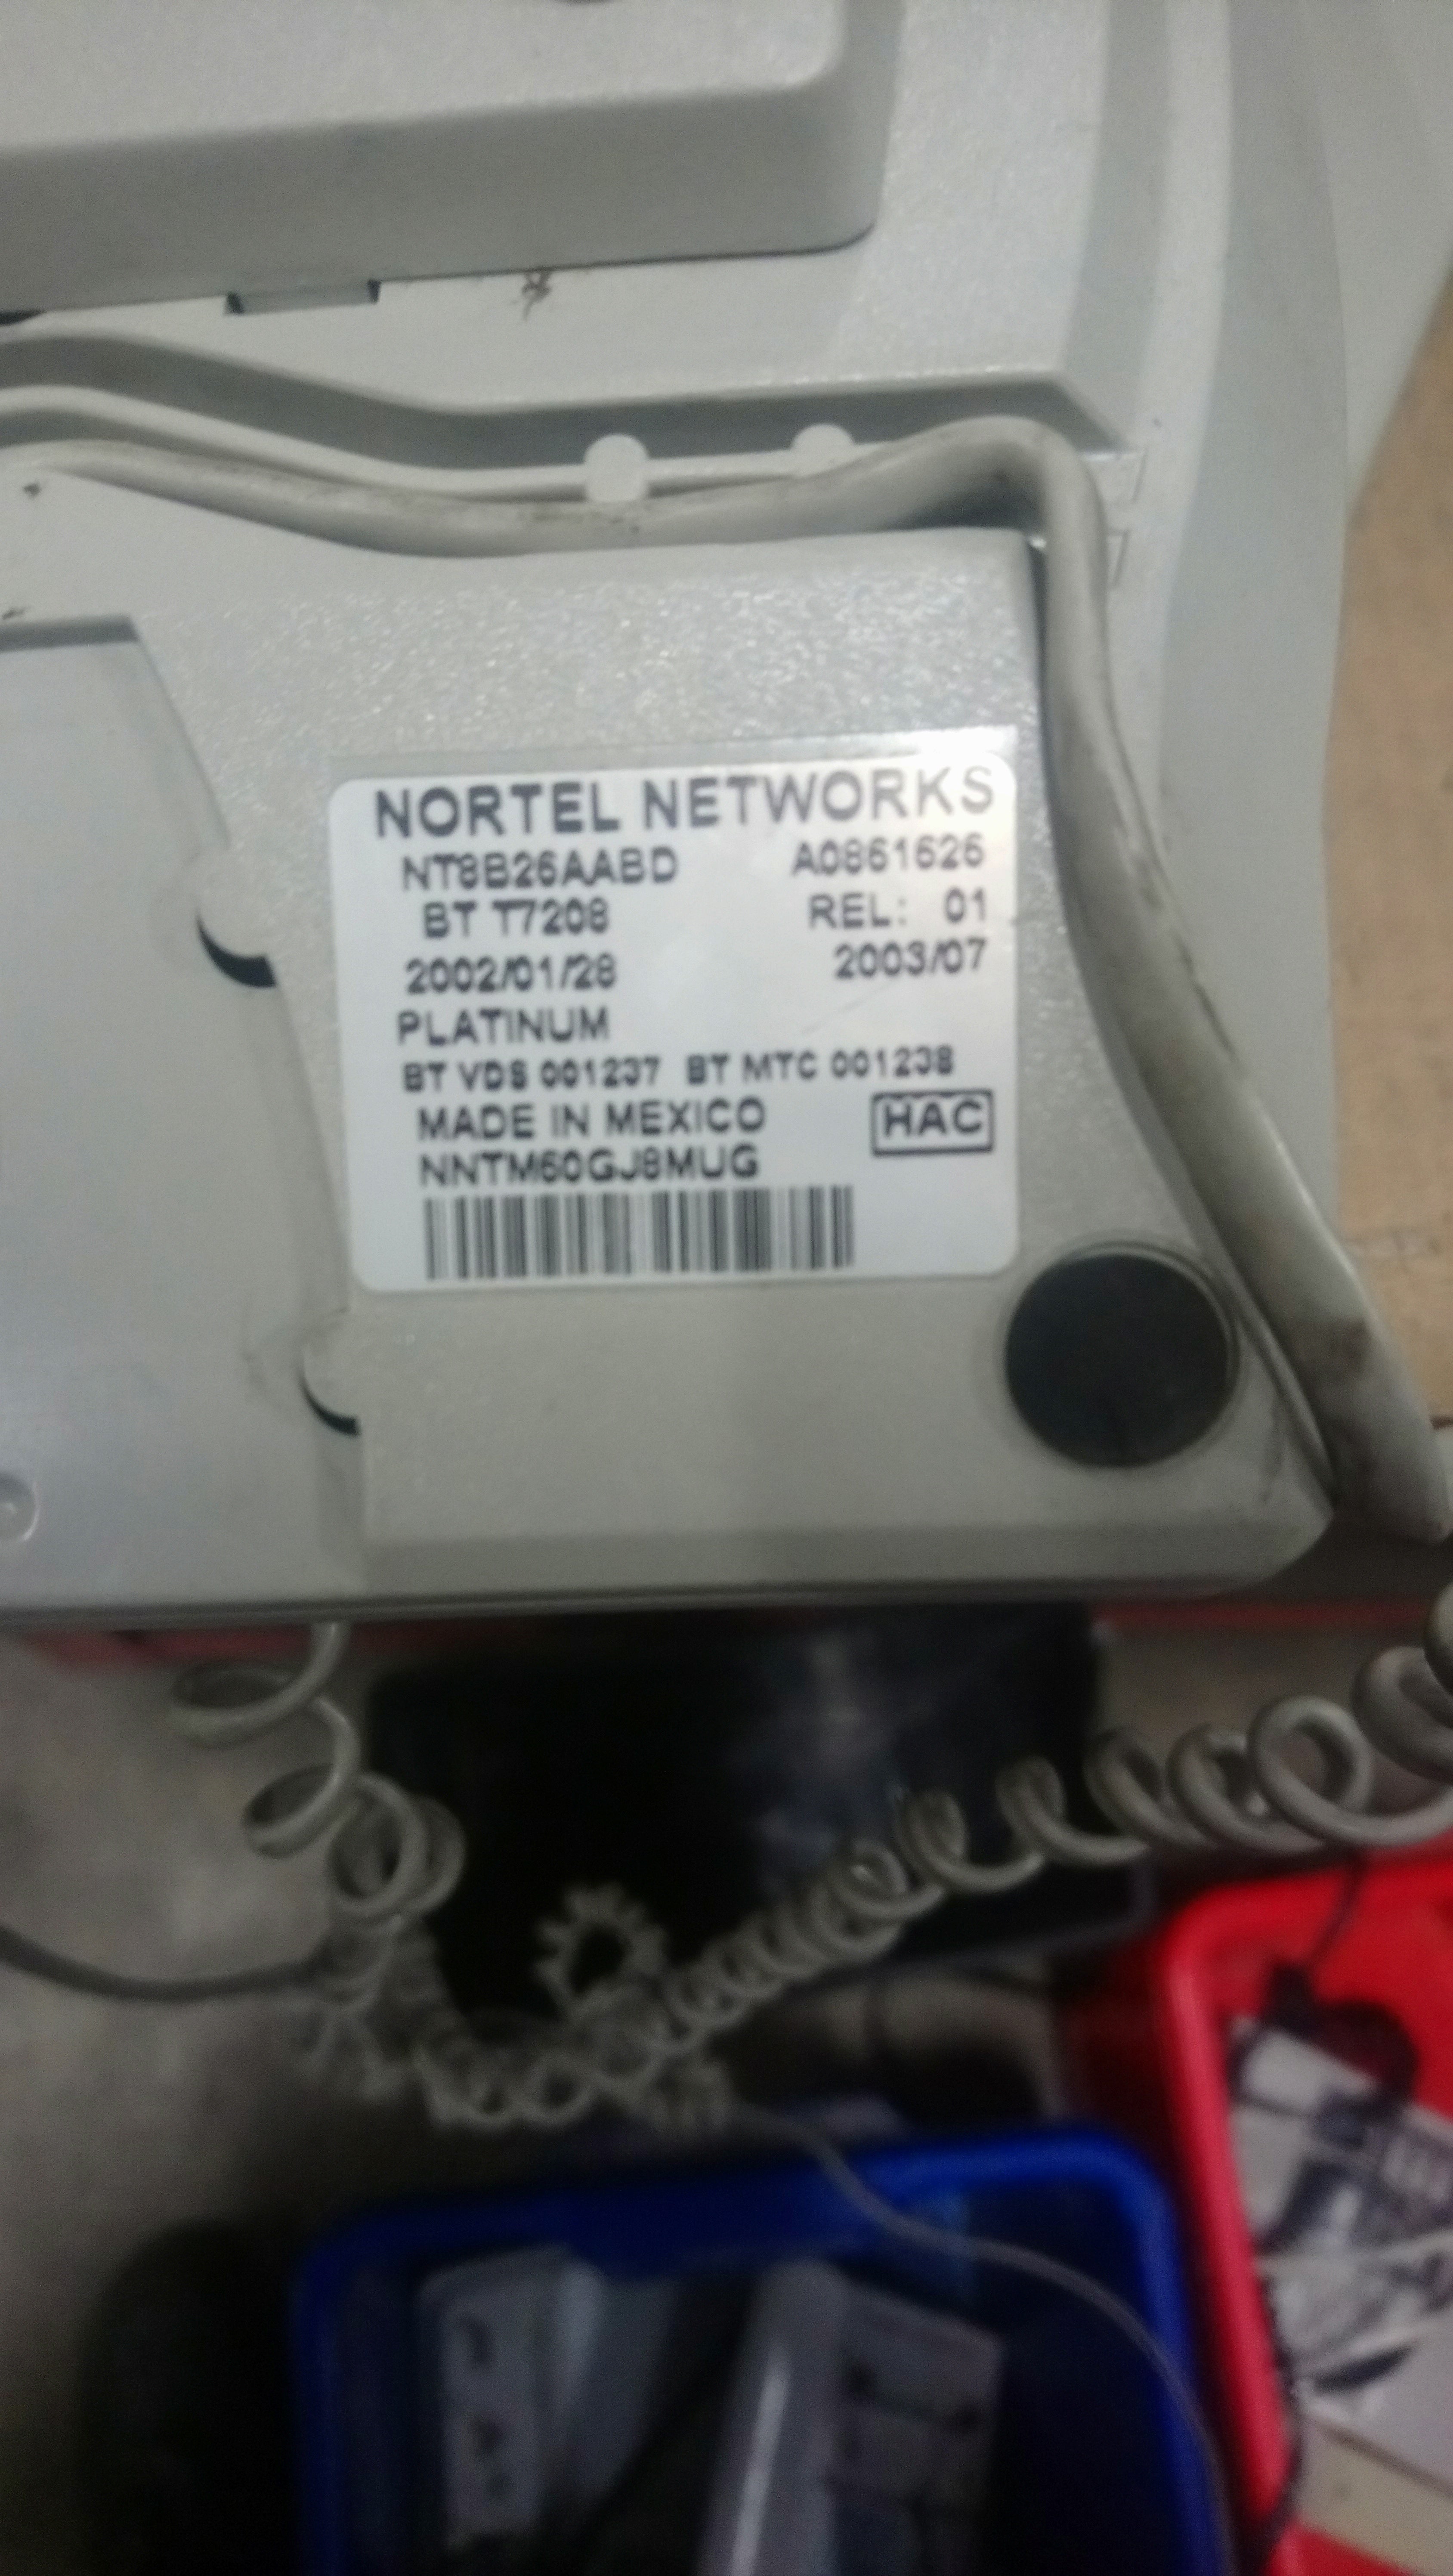 BT Nortel Networks T7208 telephone handset  (NT8B26AABD)